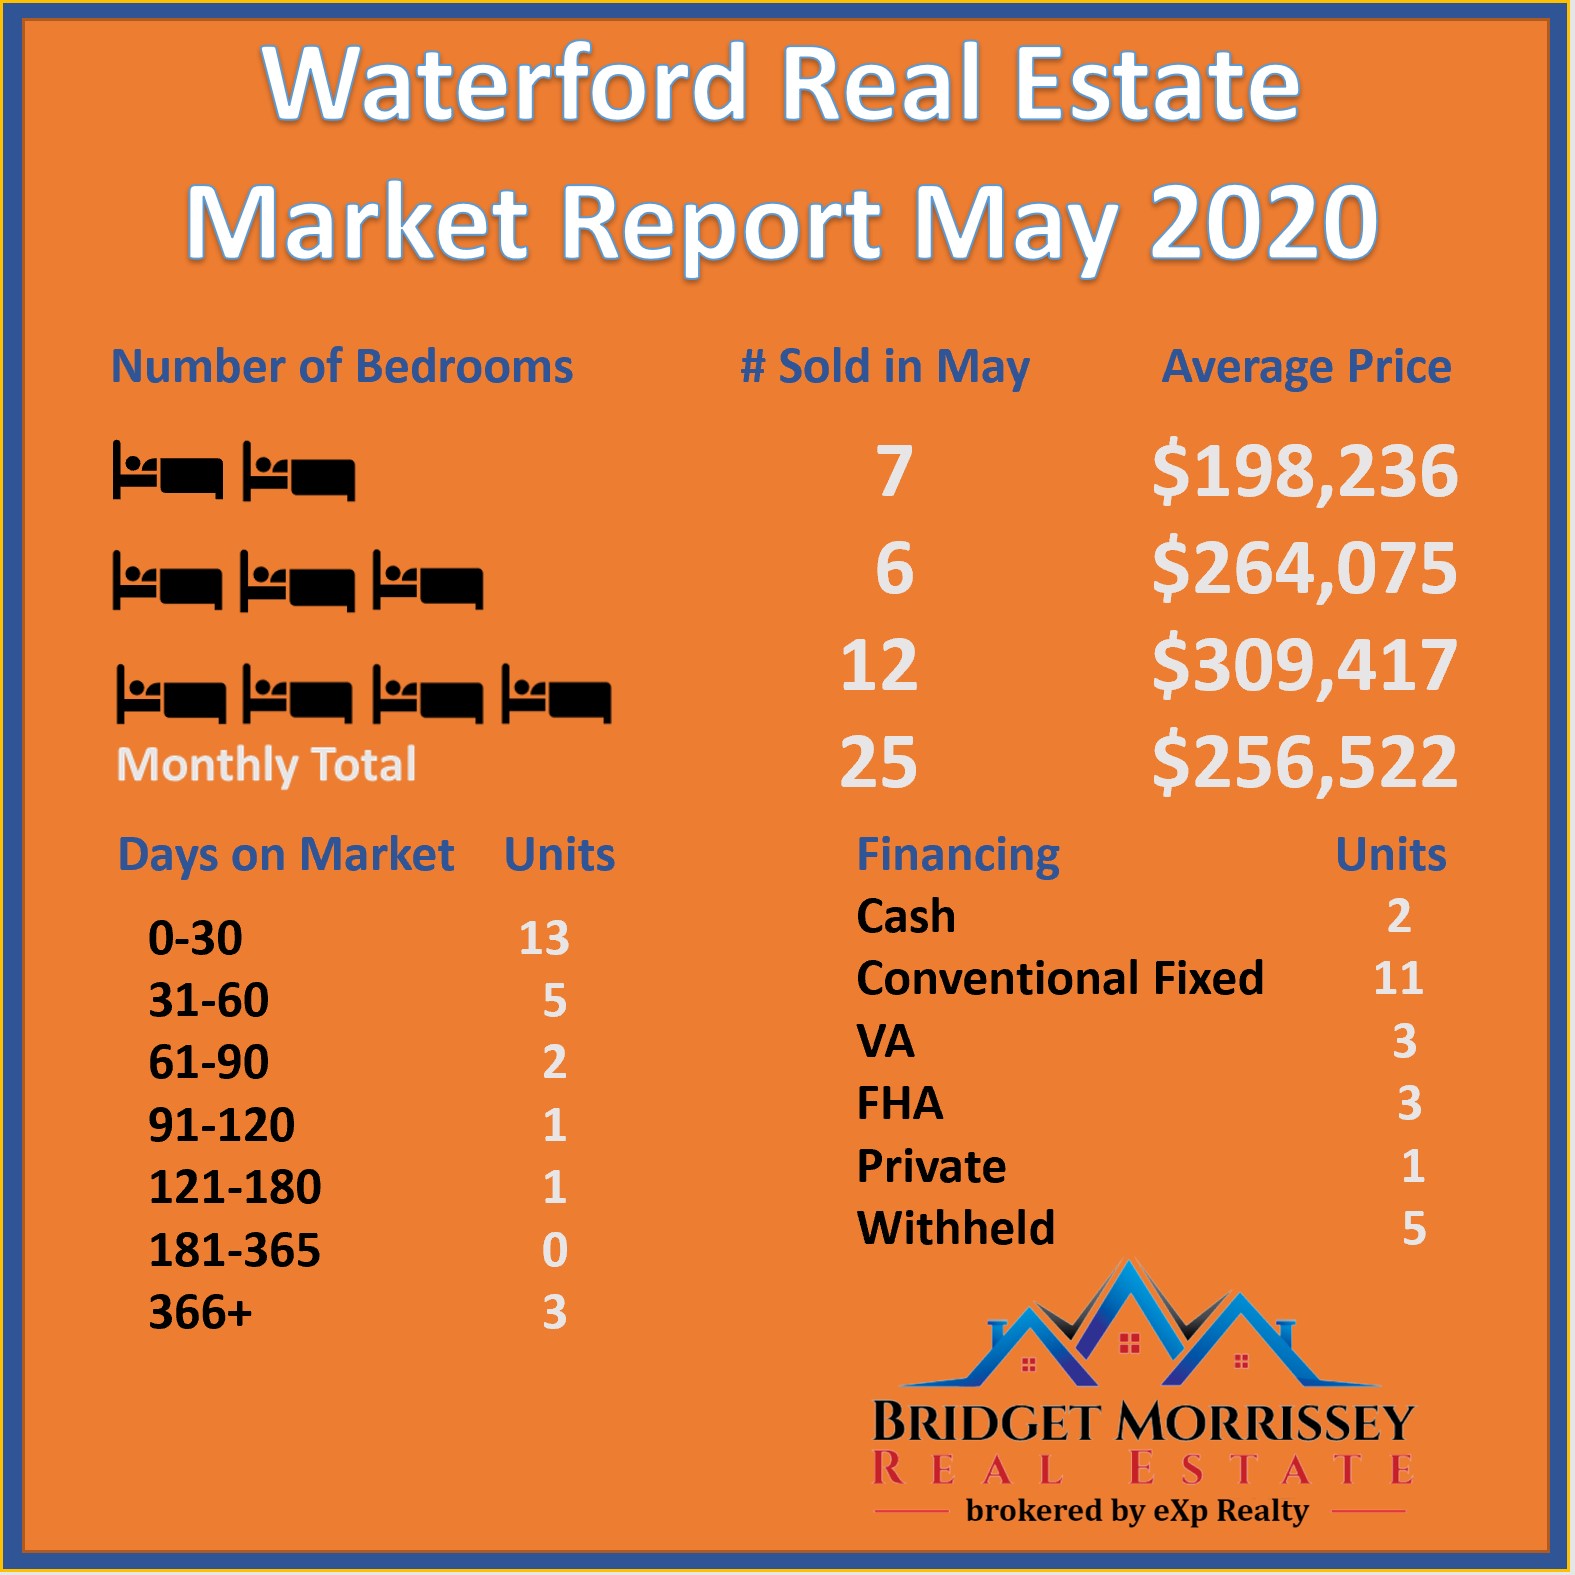 Waterford Real Estate Median List Price from Waterford Realtor Bridget Morrissey